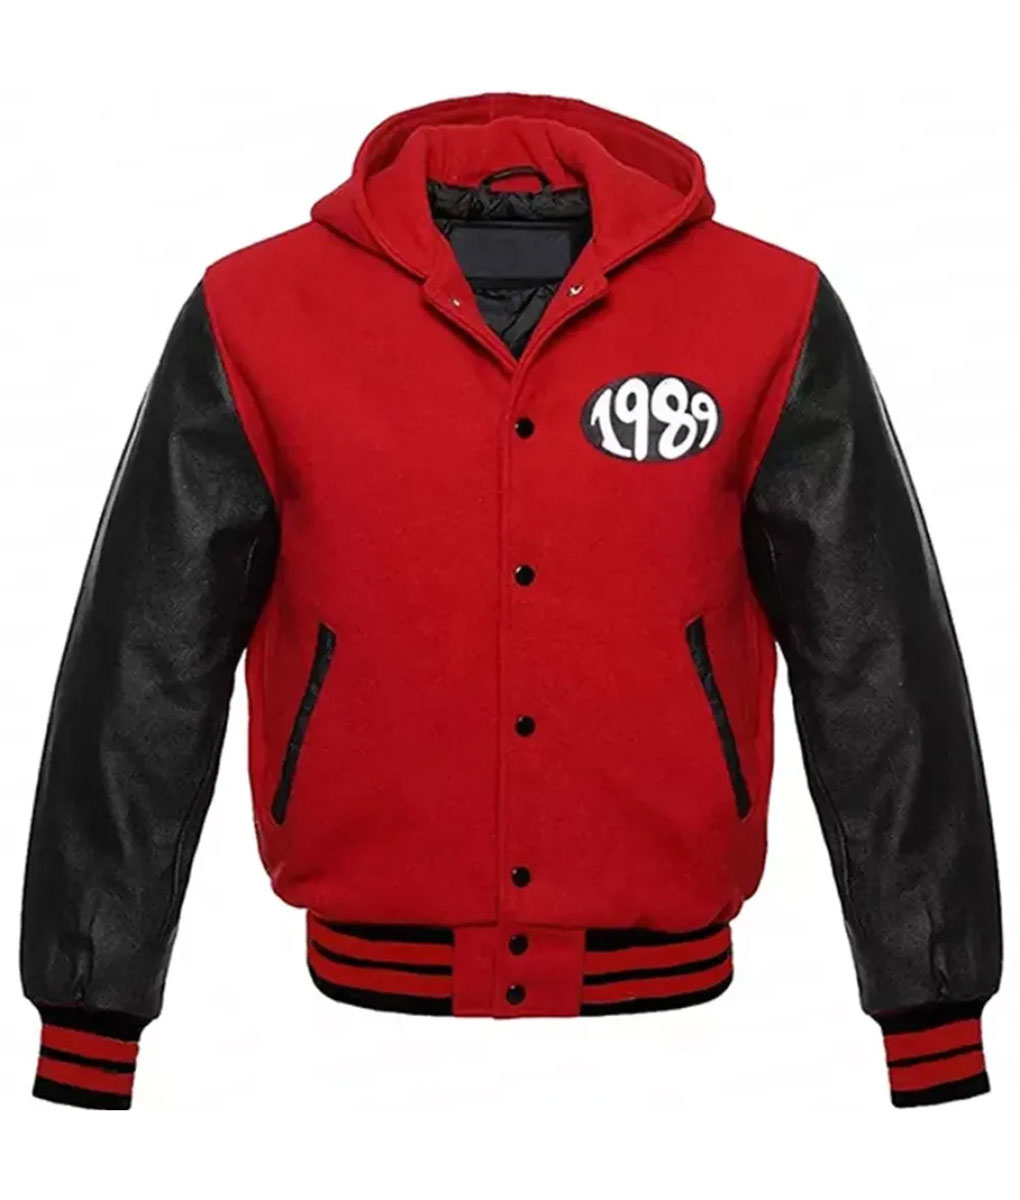 Taylor Swift 1989 Red Varsity Hooded Jacket (3)